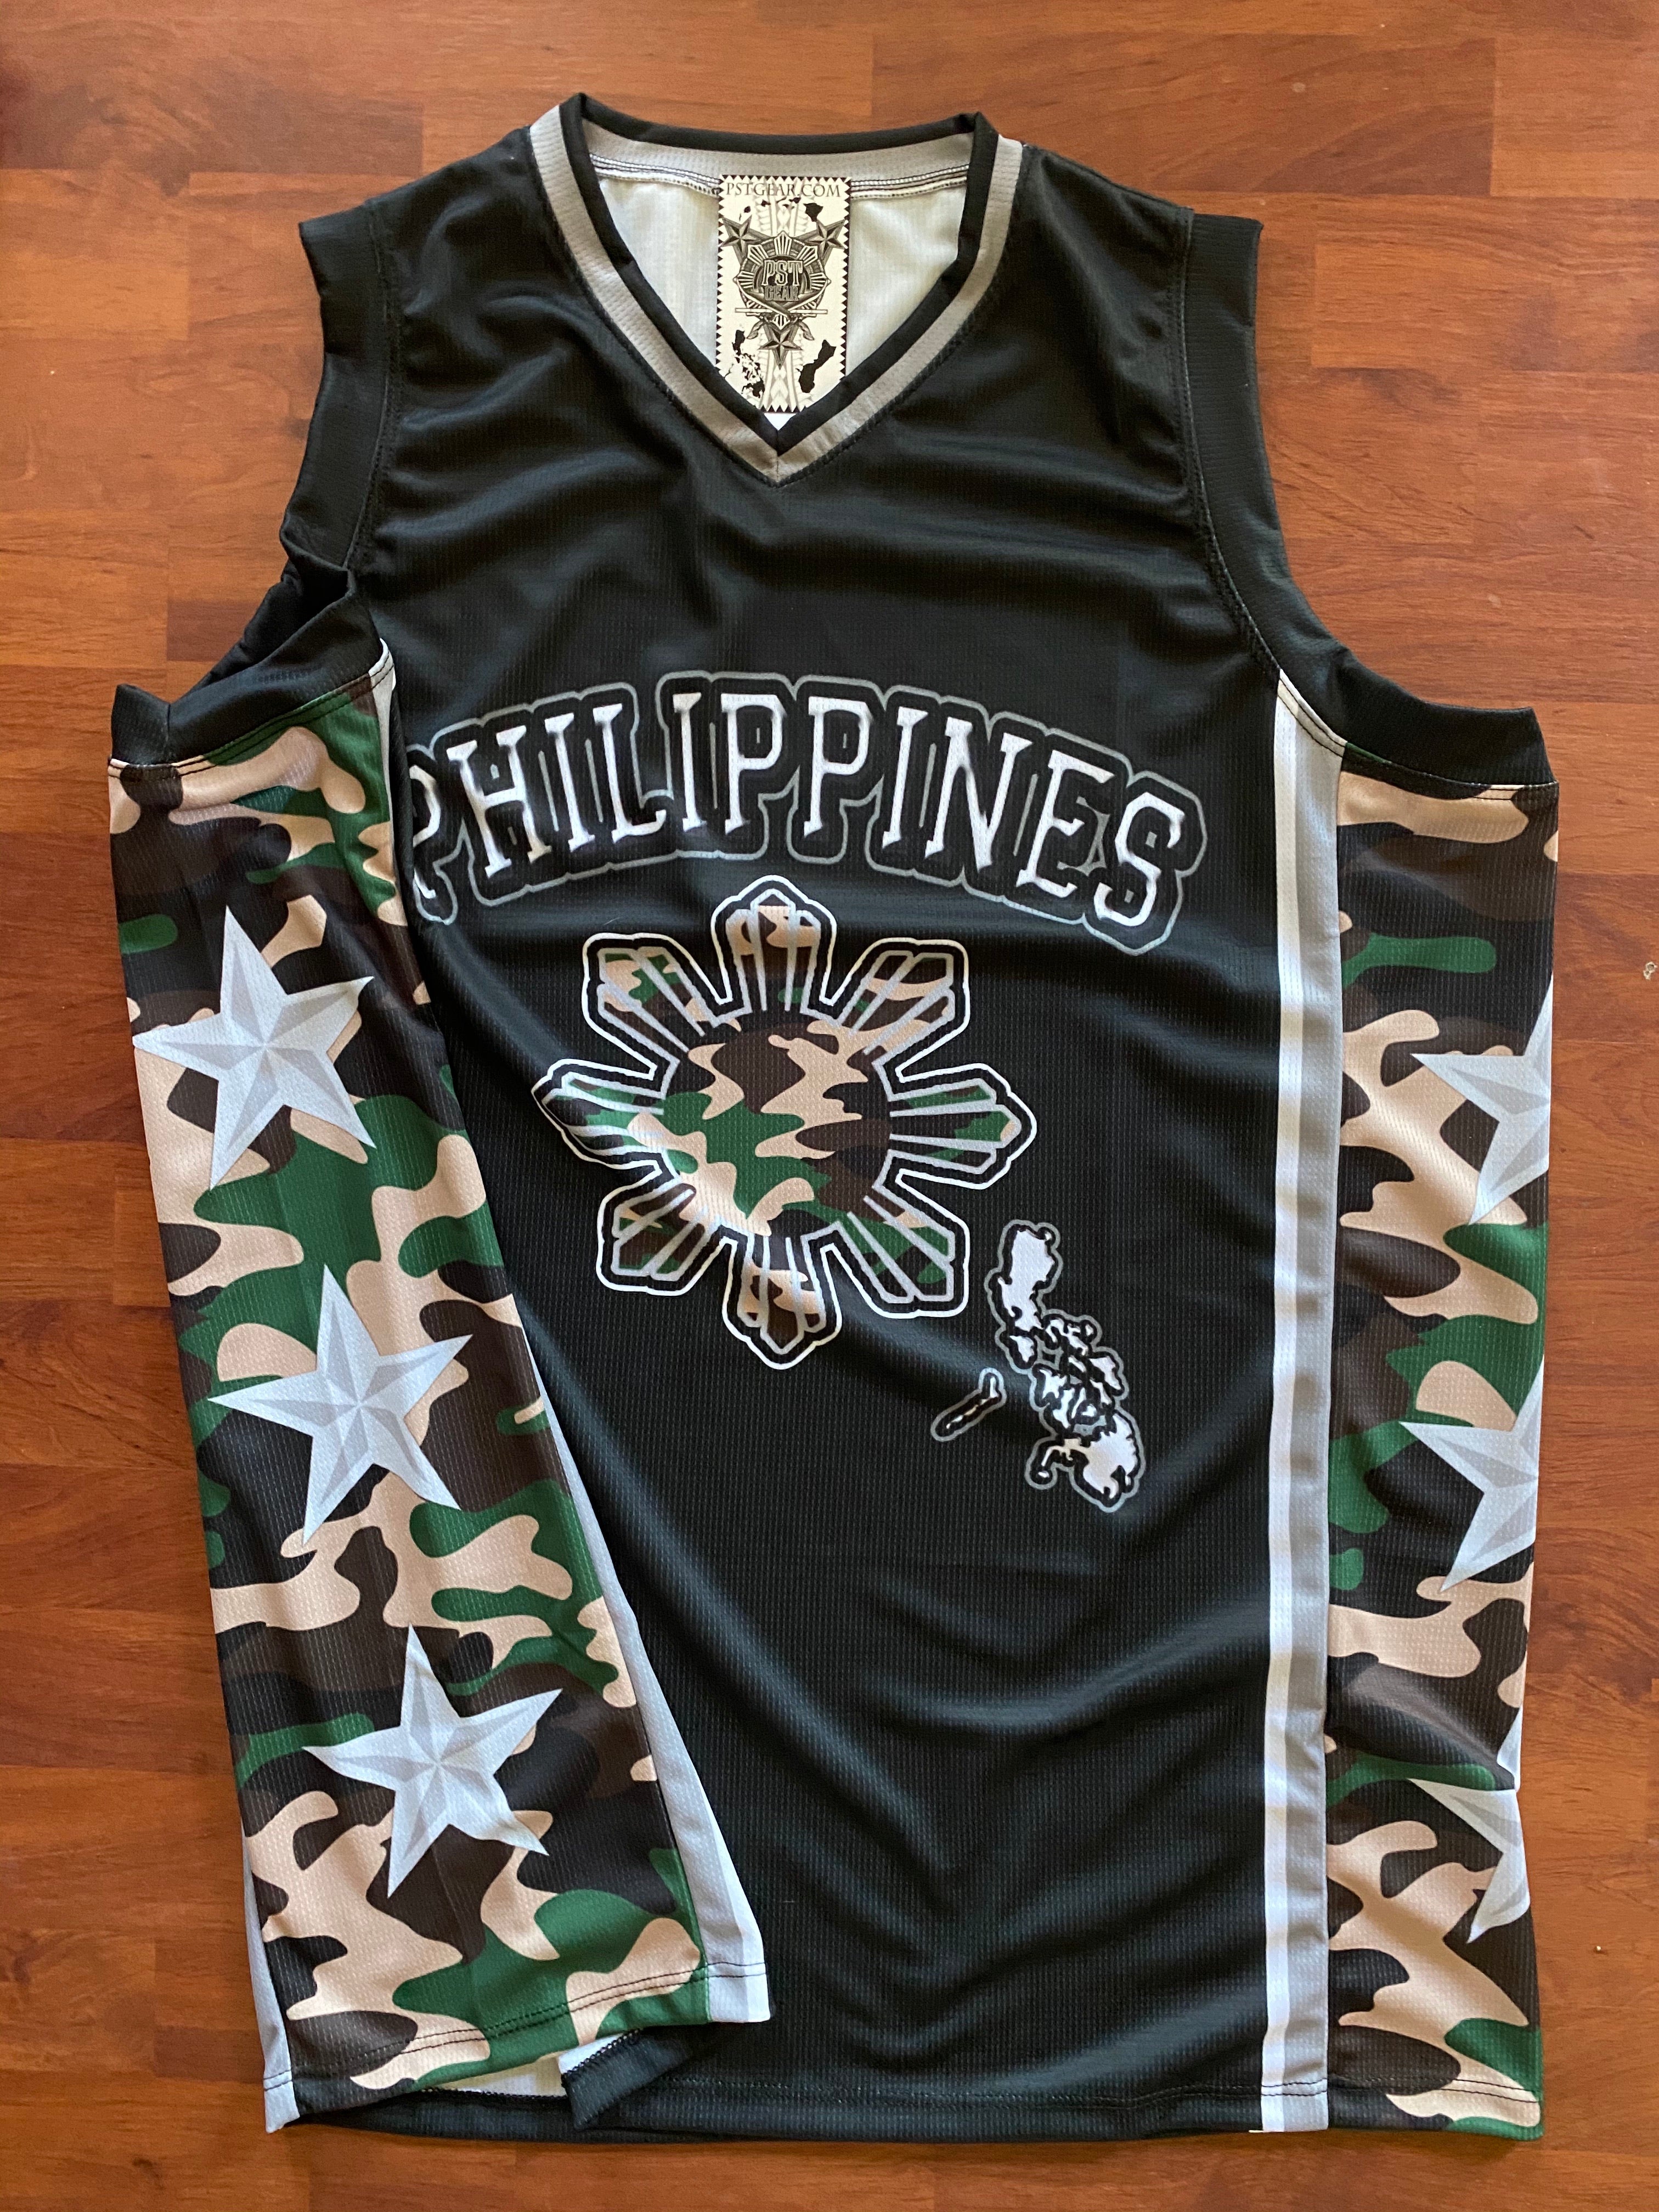 green camouflage basketball jersey, basketball jersey template